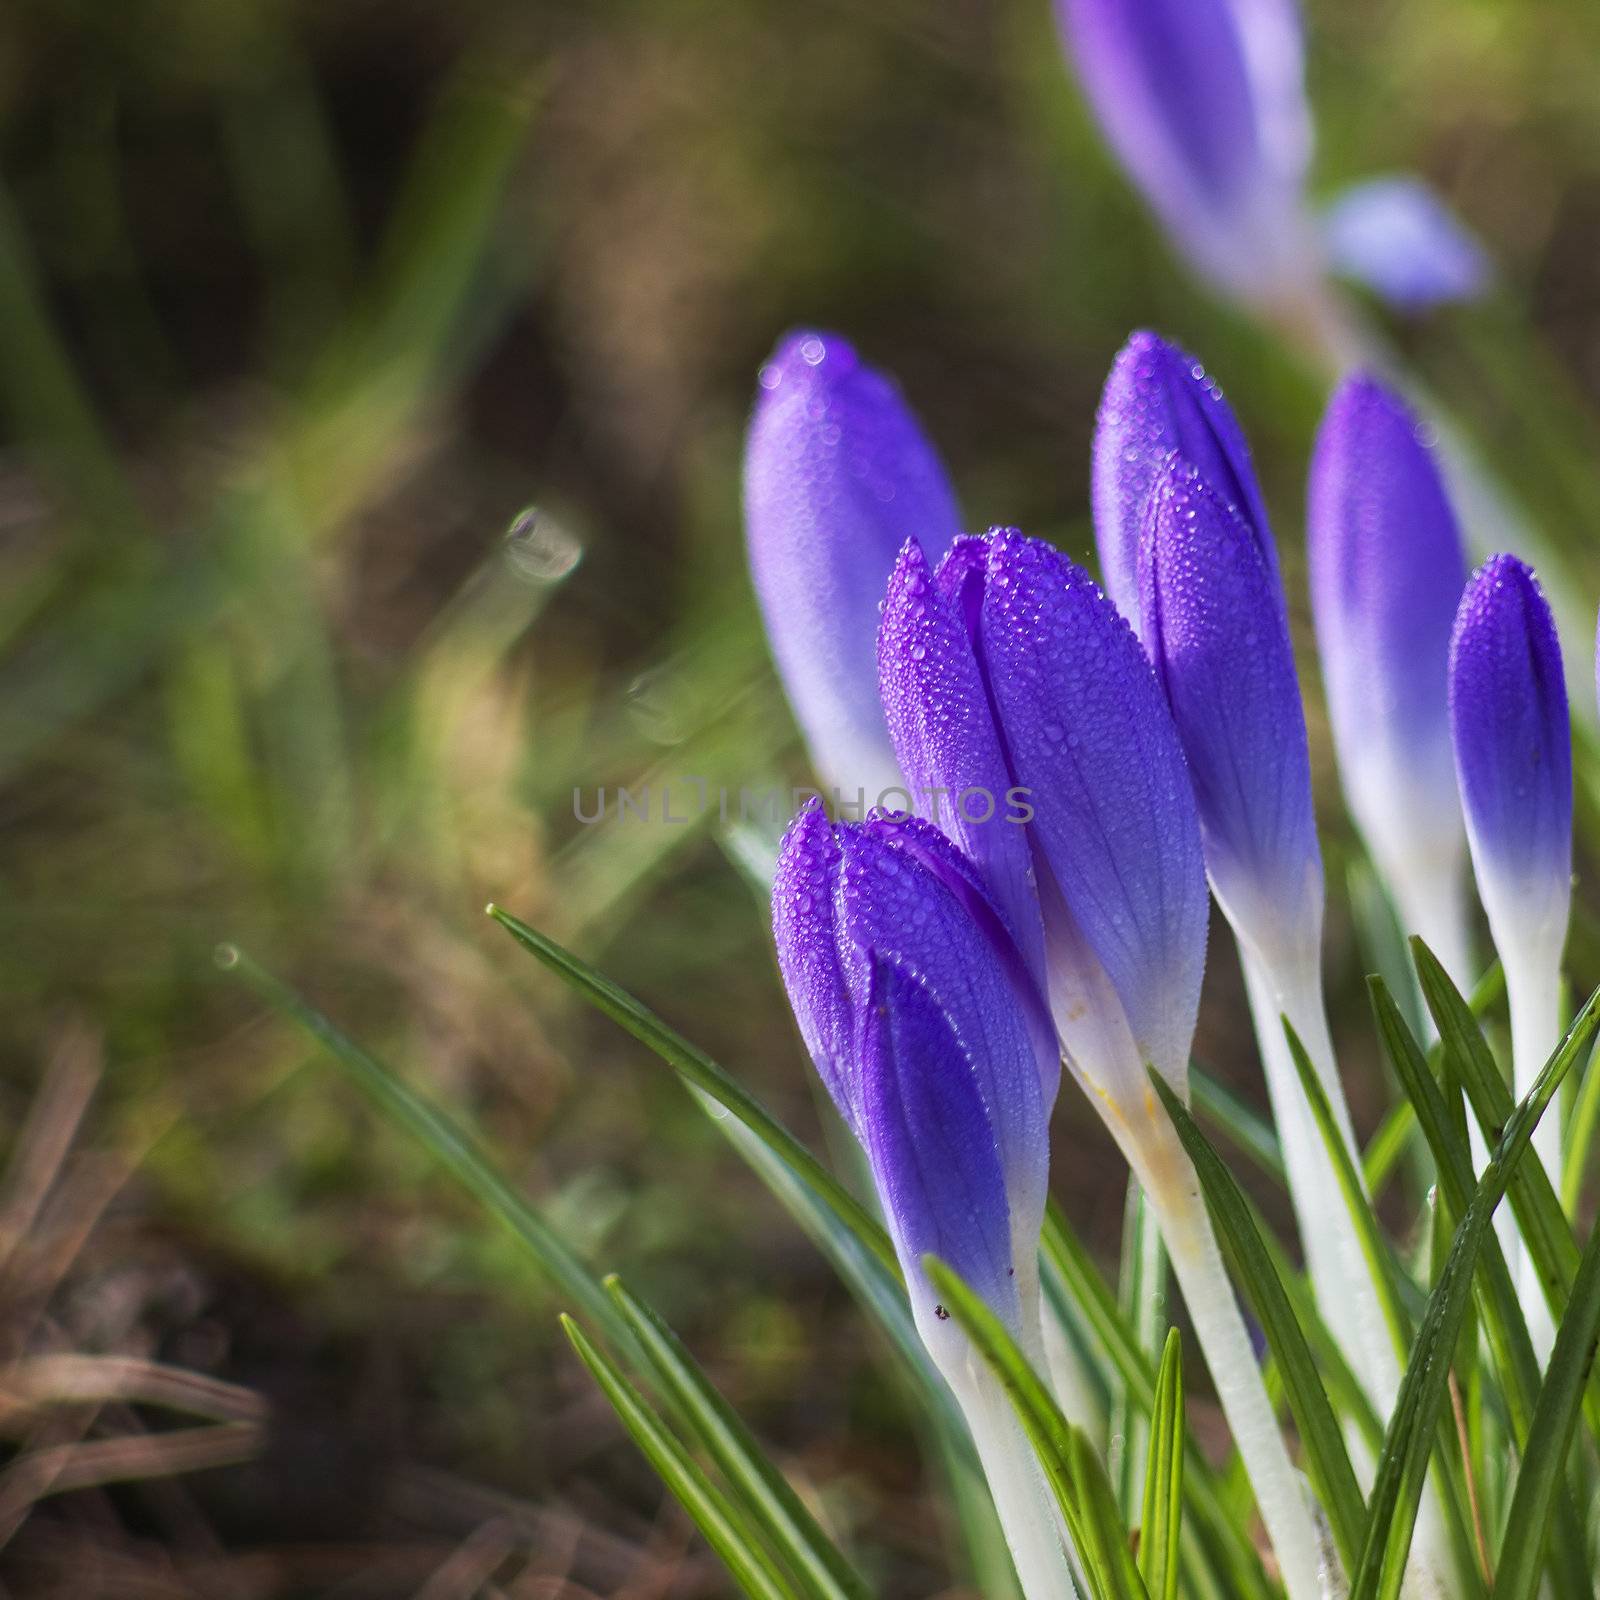 lot of purple crocus flowers in spring  by miradrozdowski